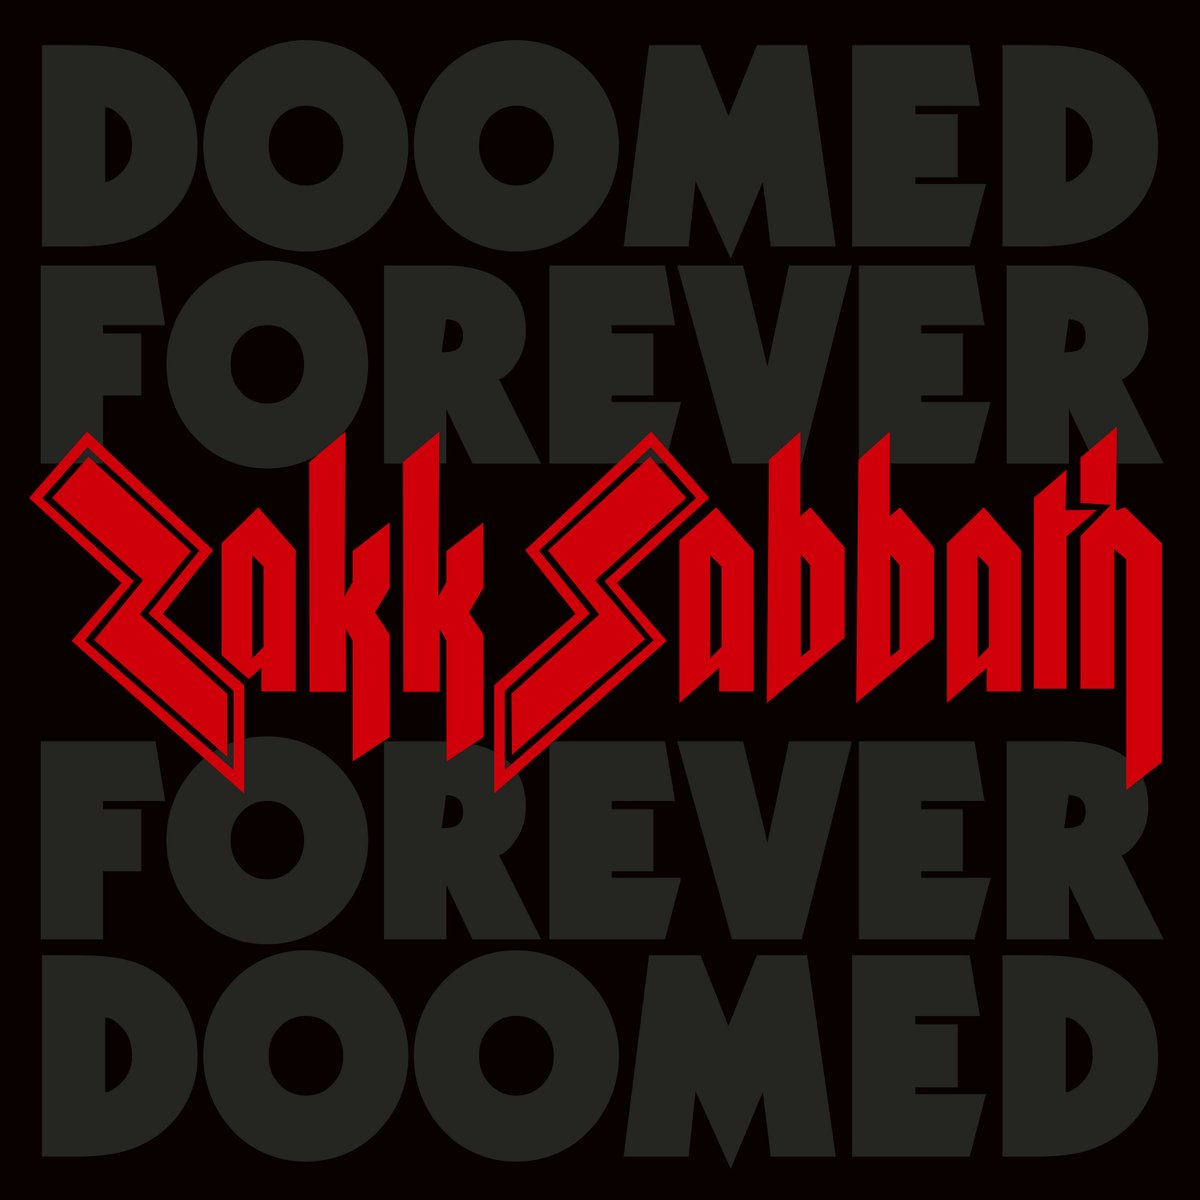 Out today: 'Doomed Forever Forever Doomed' by @zakk_sabbath! Get your copy now if you haven't yet: lnk.spkr.media/doomed-forever